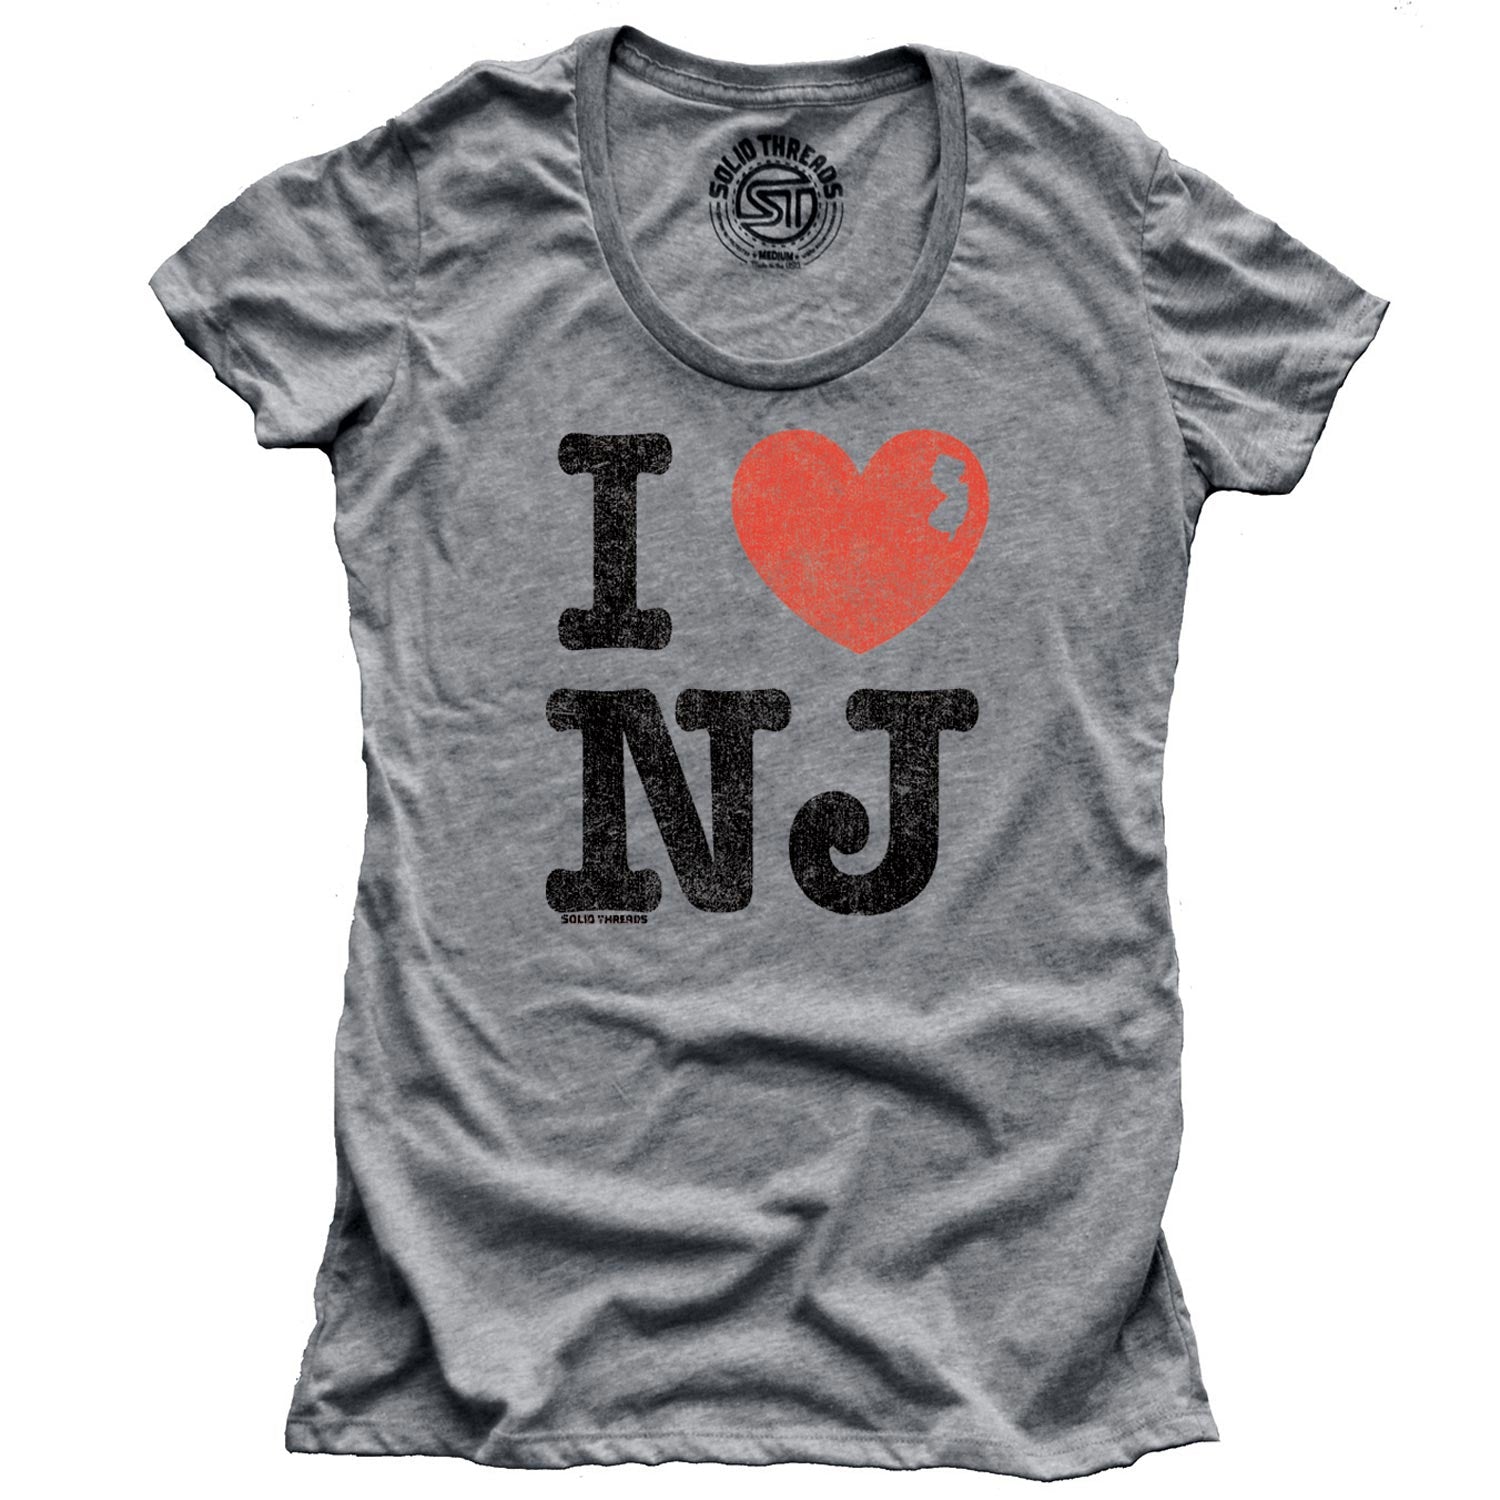 Women's I Heart NJ Vintage Jersey Graphic Tee | Retro Garden State Soft T-shirt | SOLID THREADS